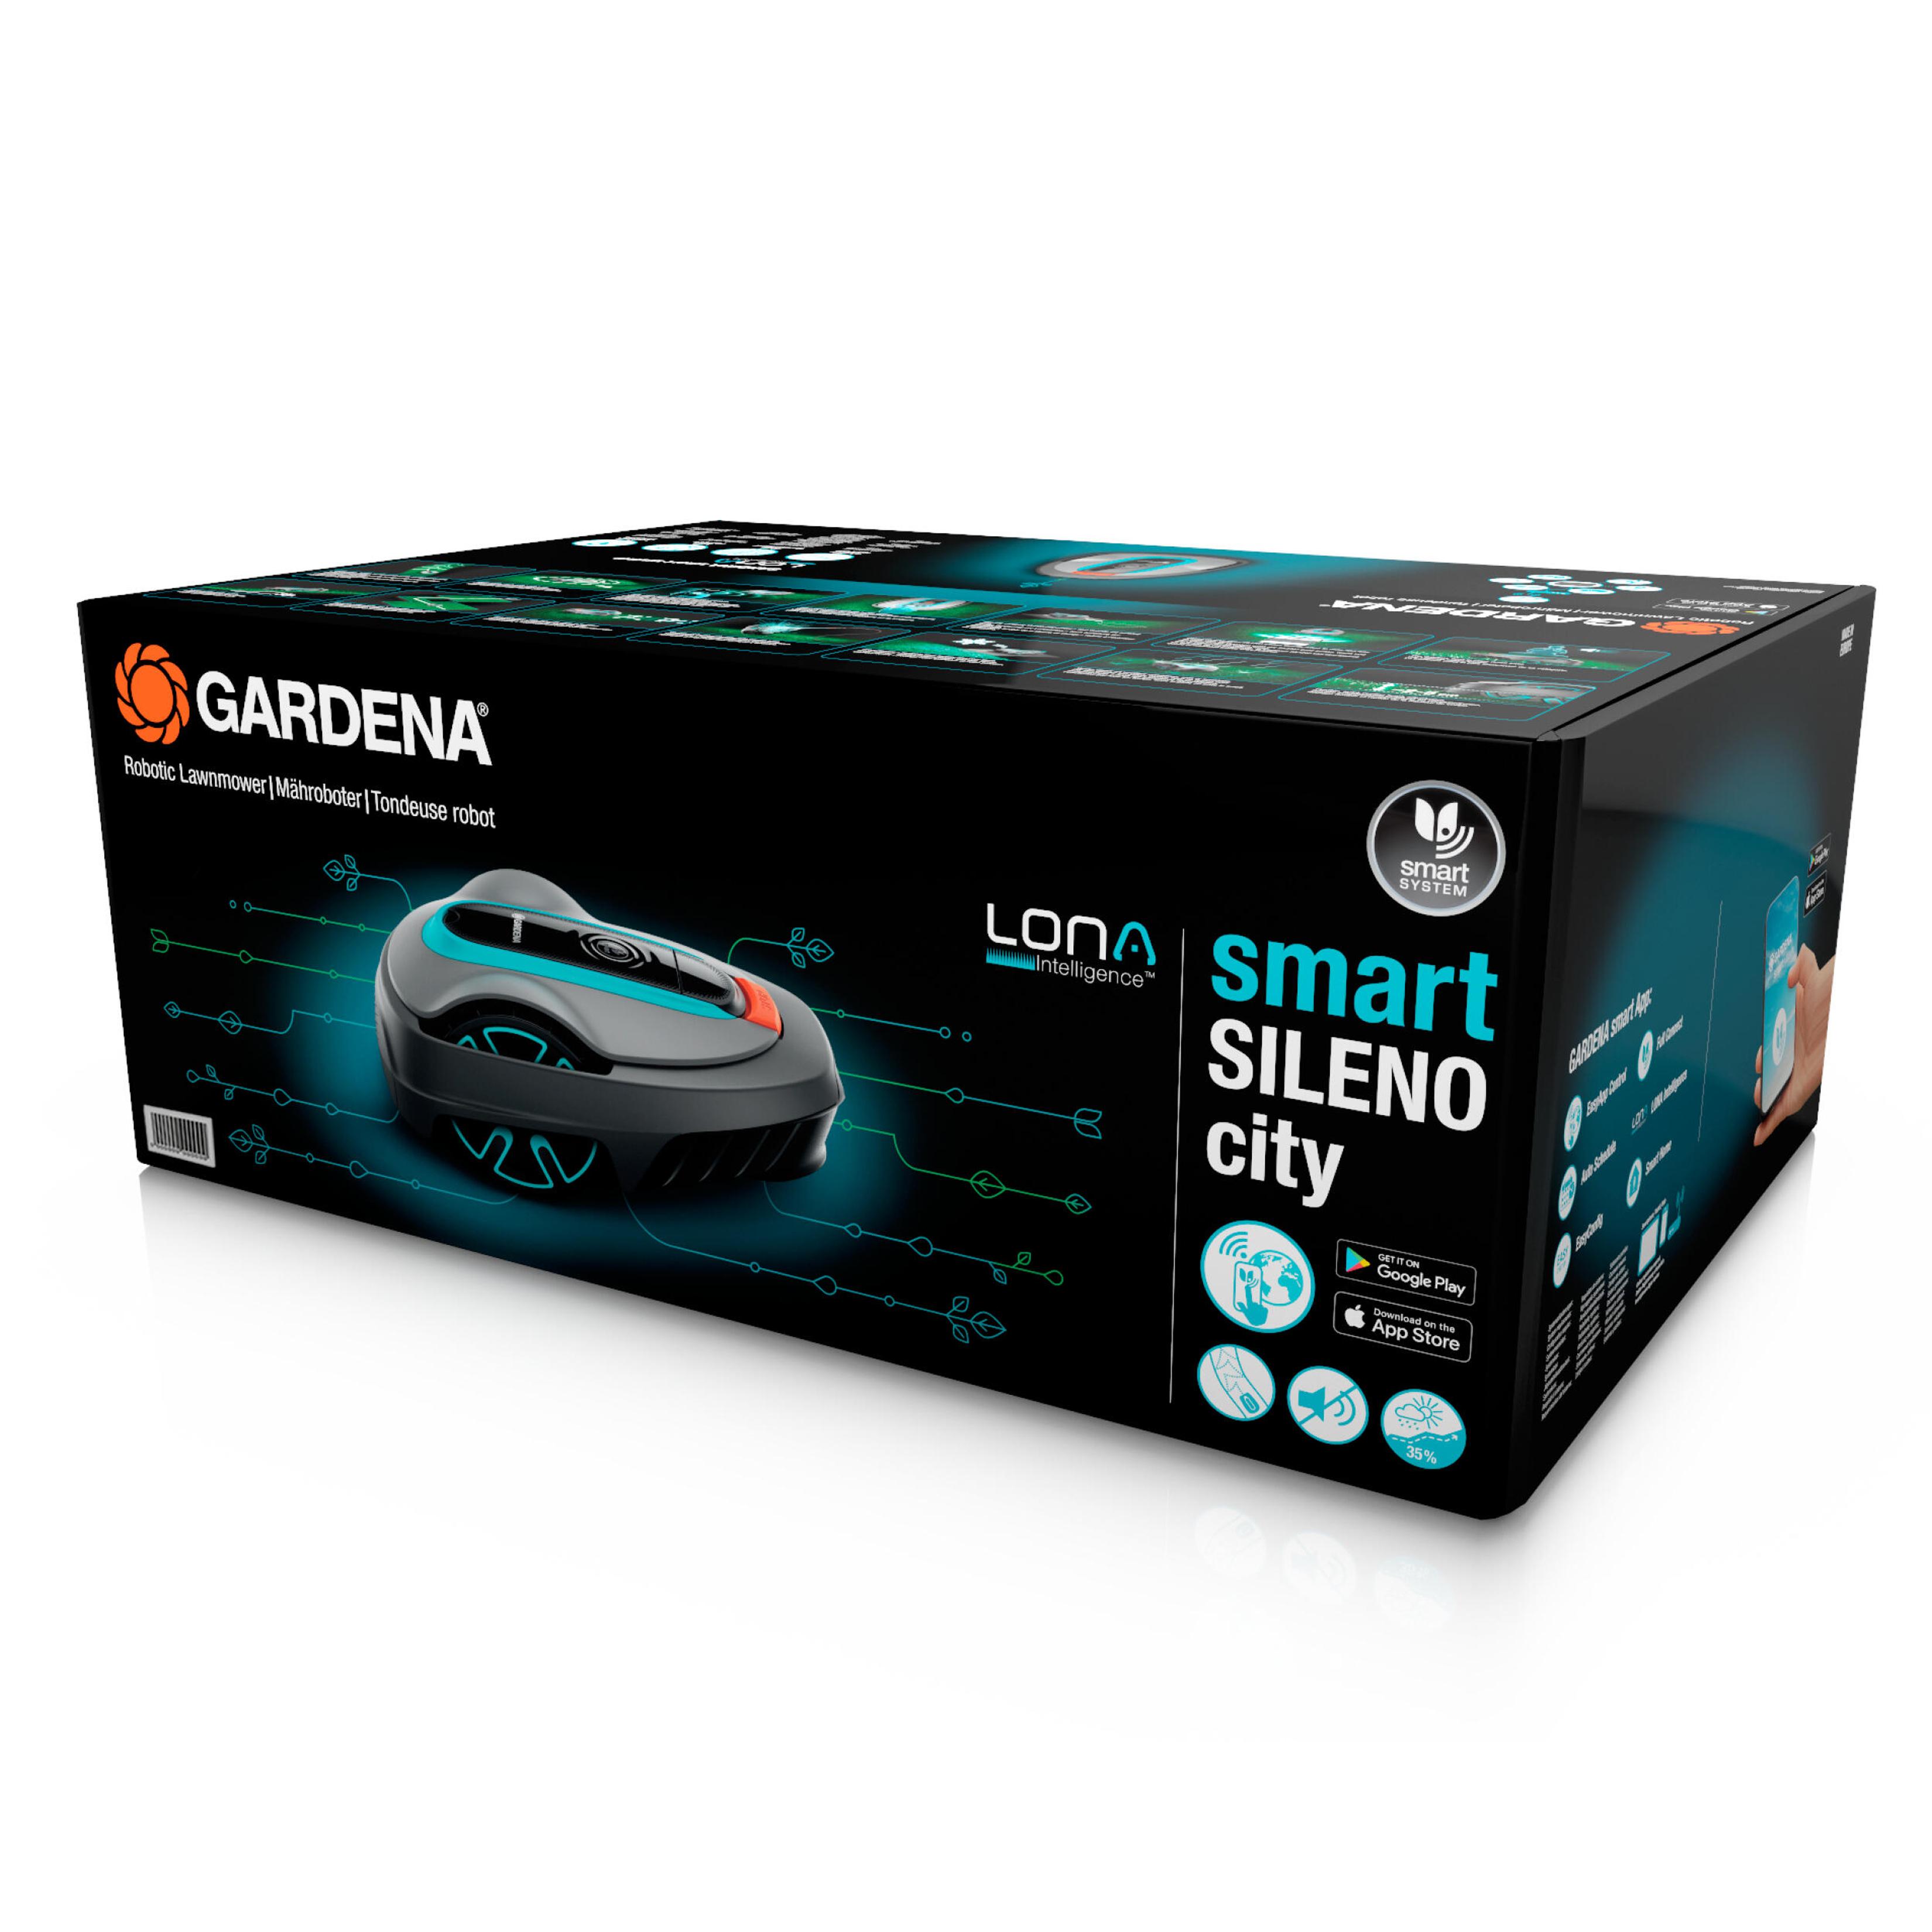 Gardena mähroboter Sileno City 600 Smart Lona thumbnail-2